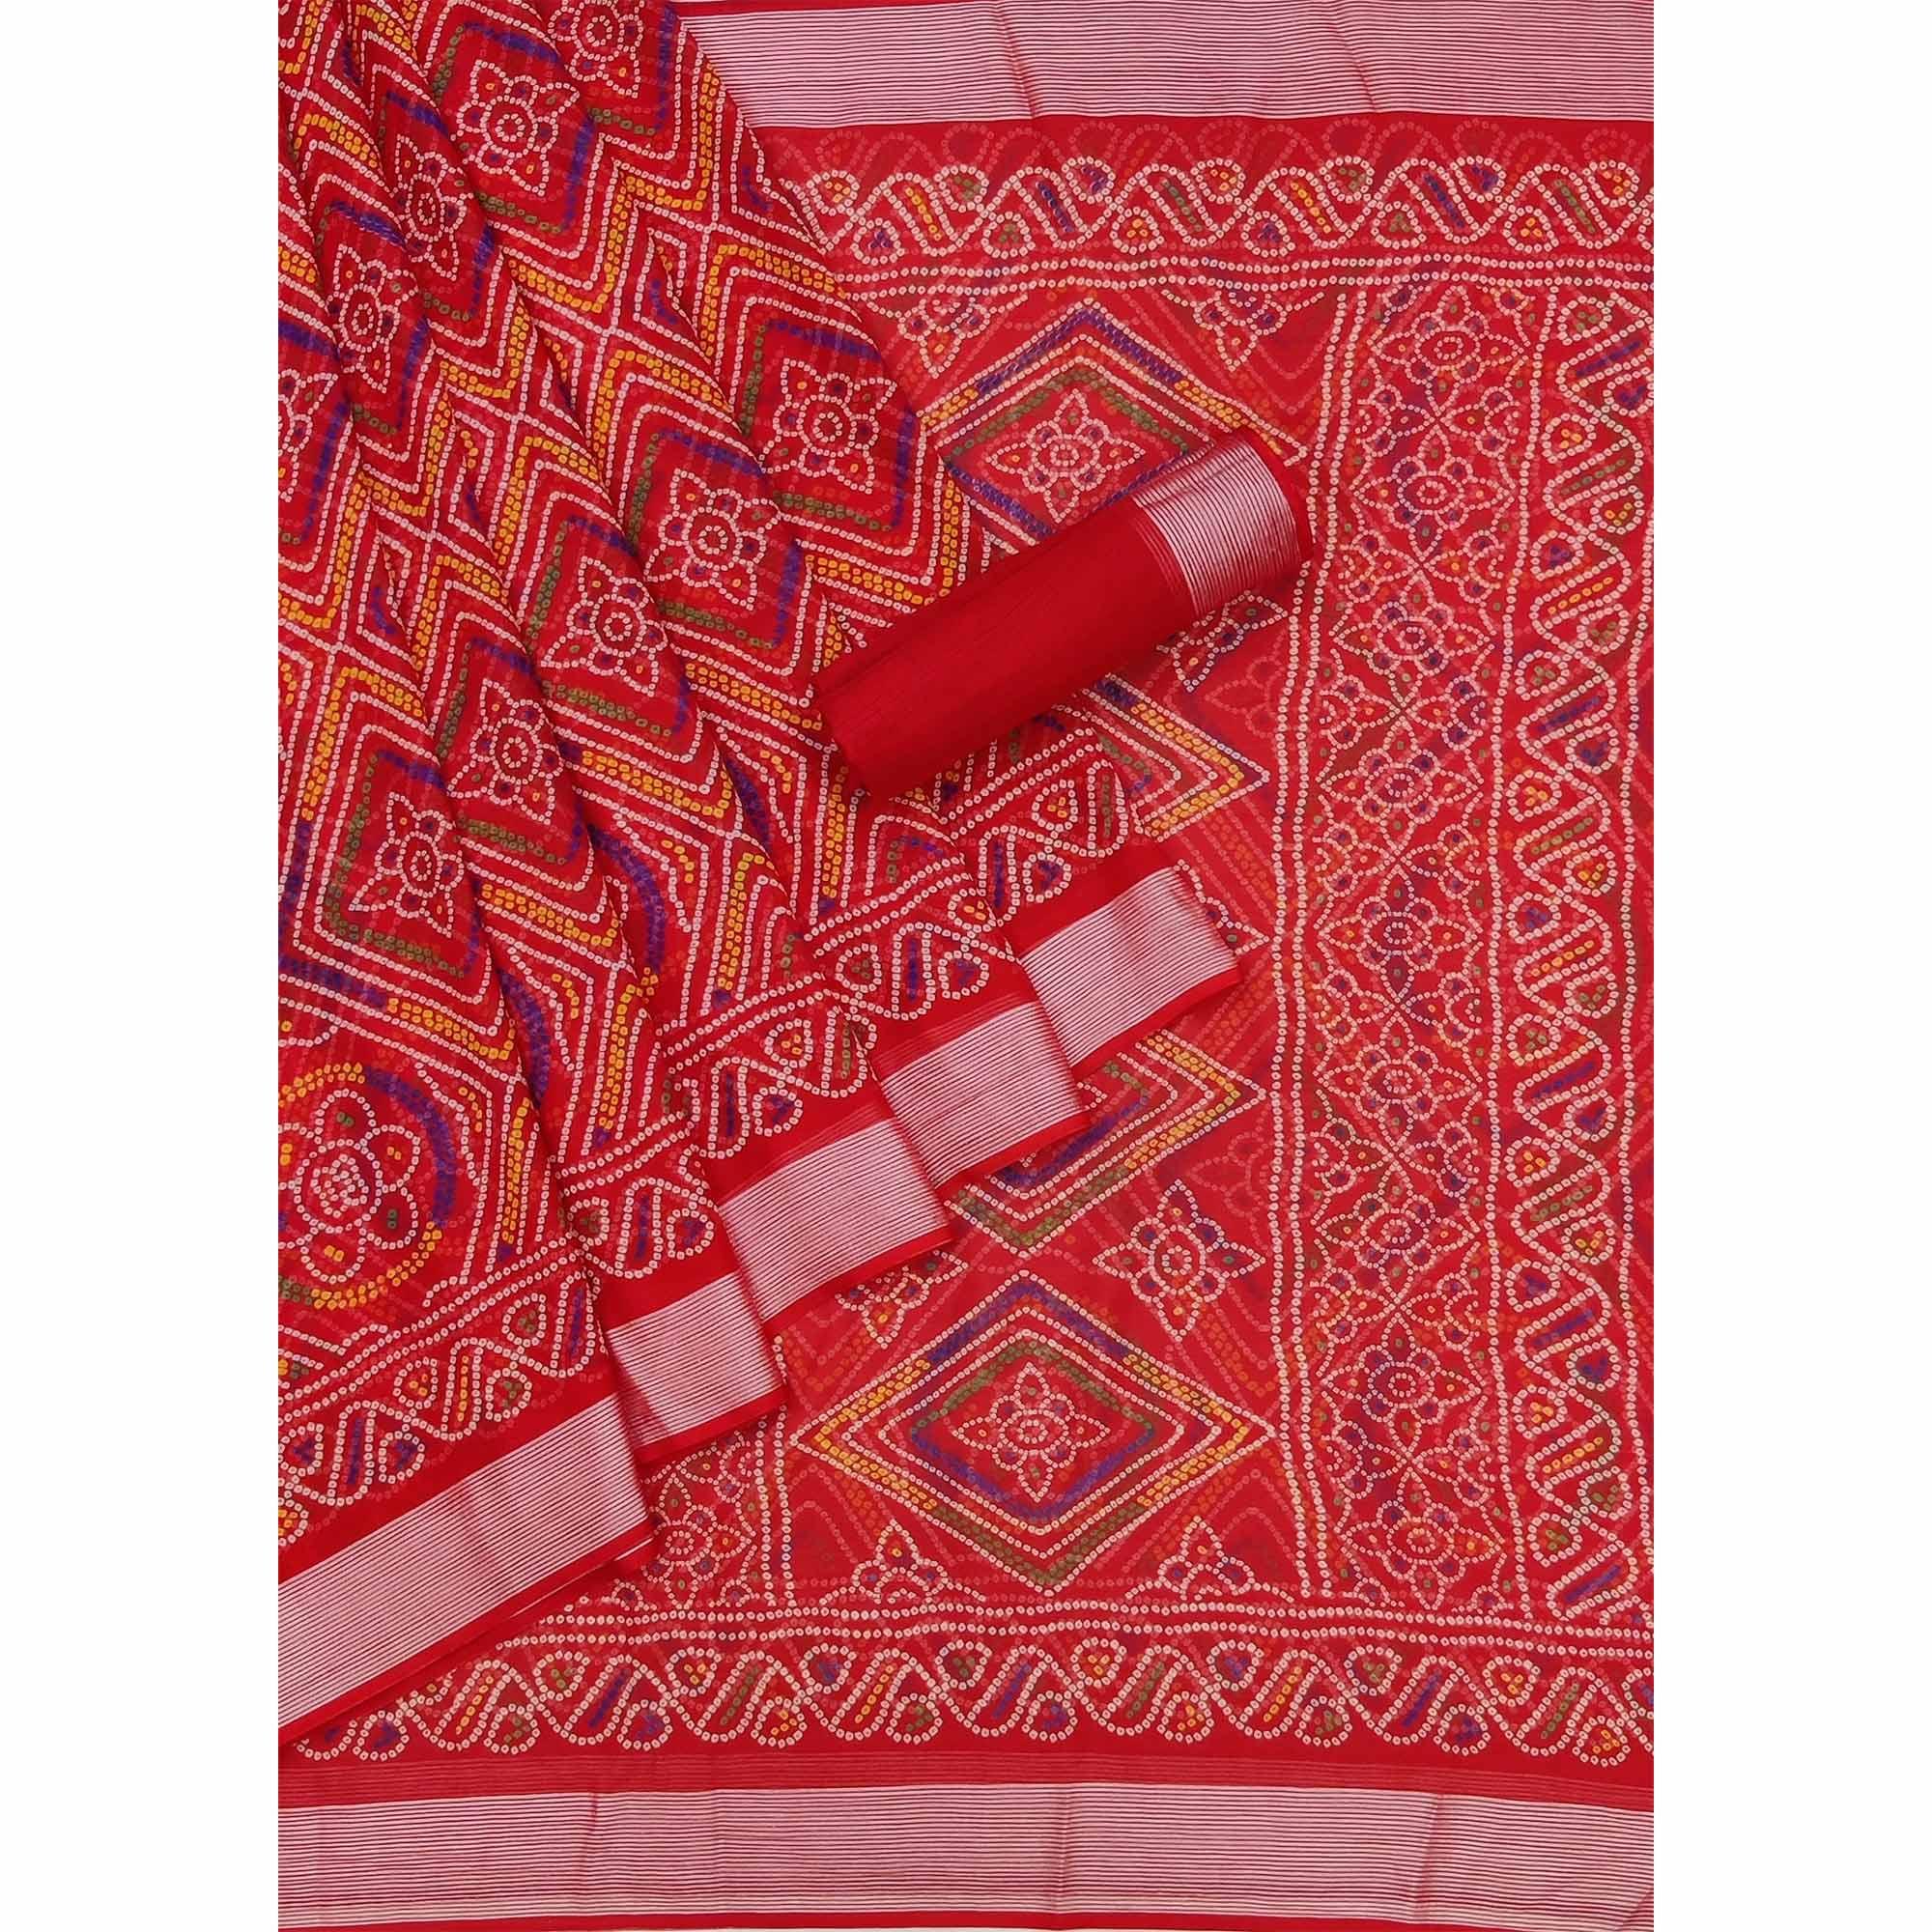 Red Casual Wear Bandhani Printed Chiffon Saree - Peachmode